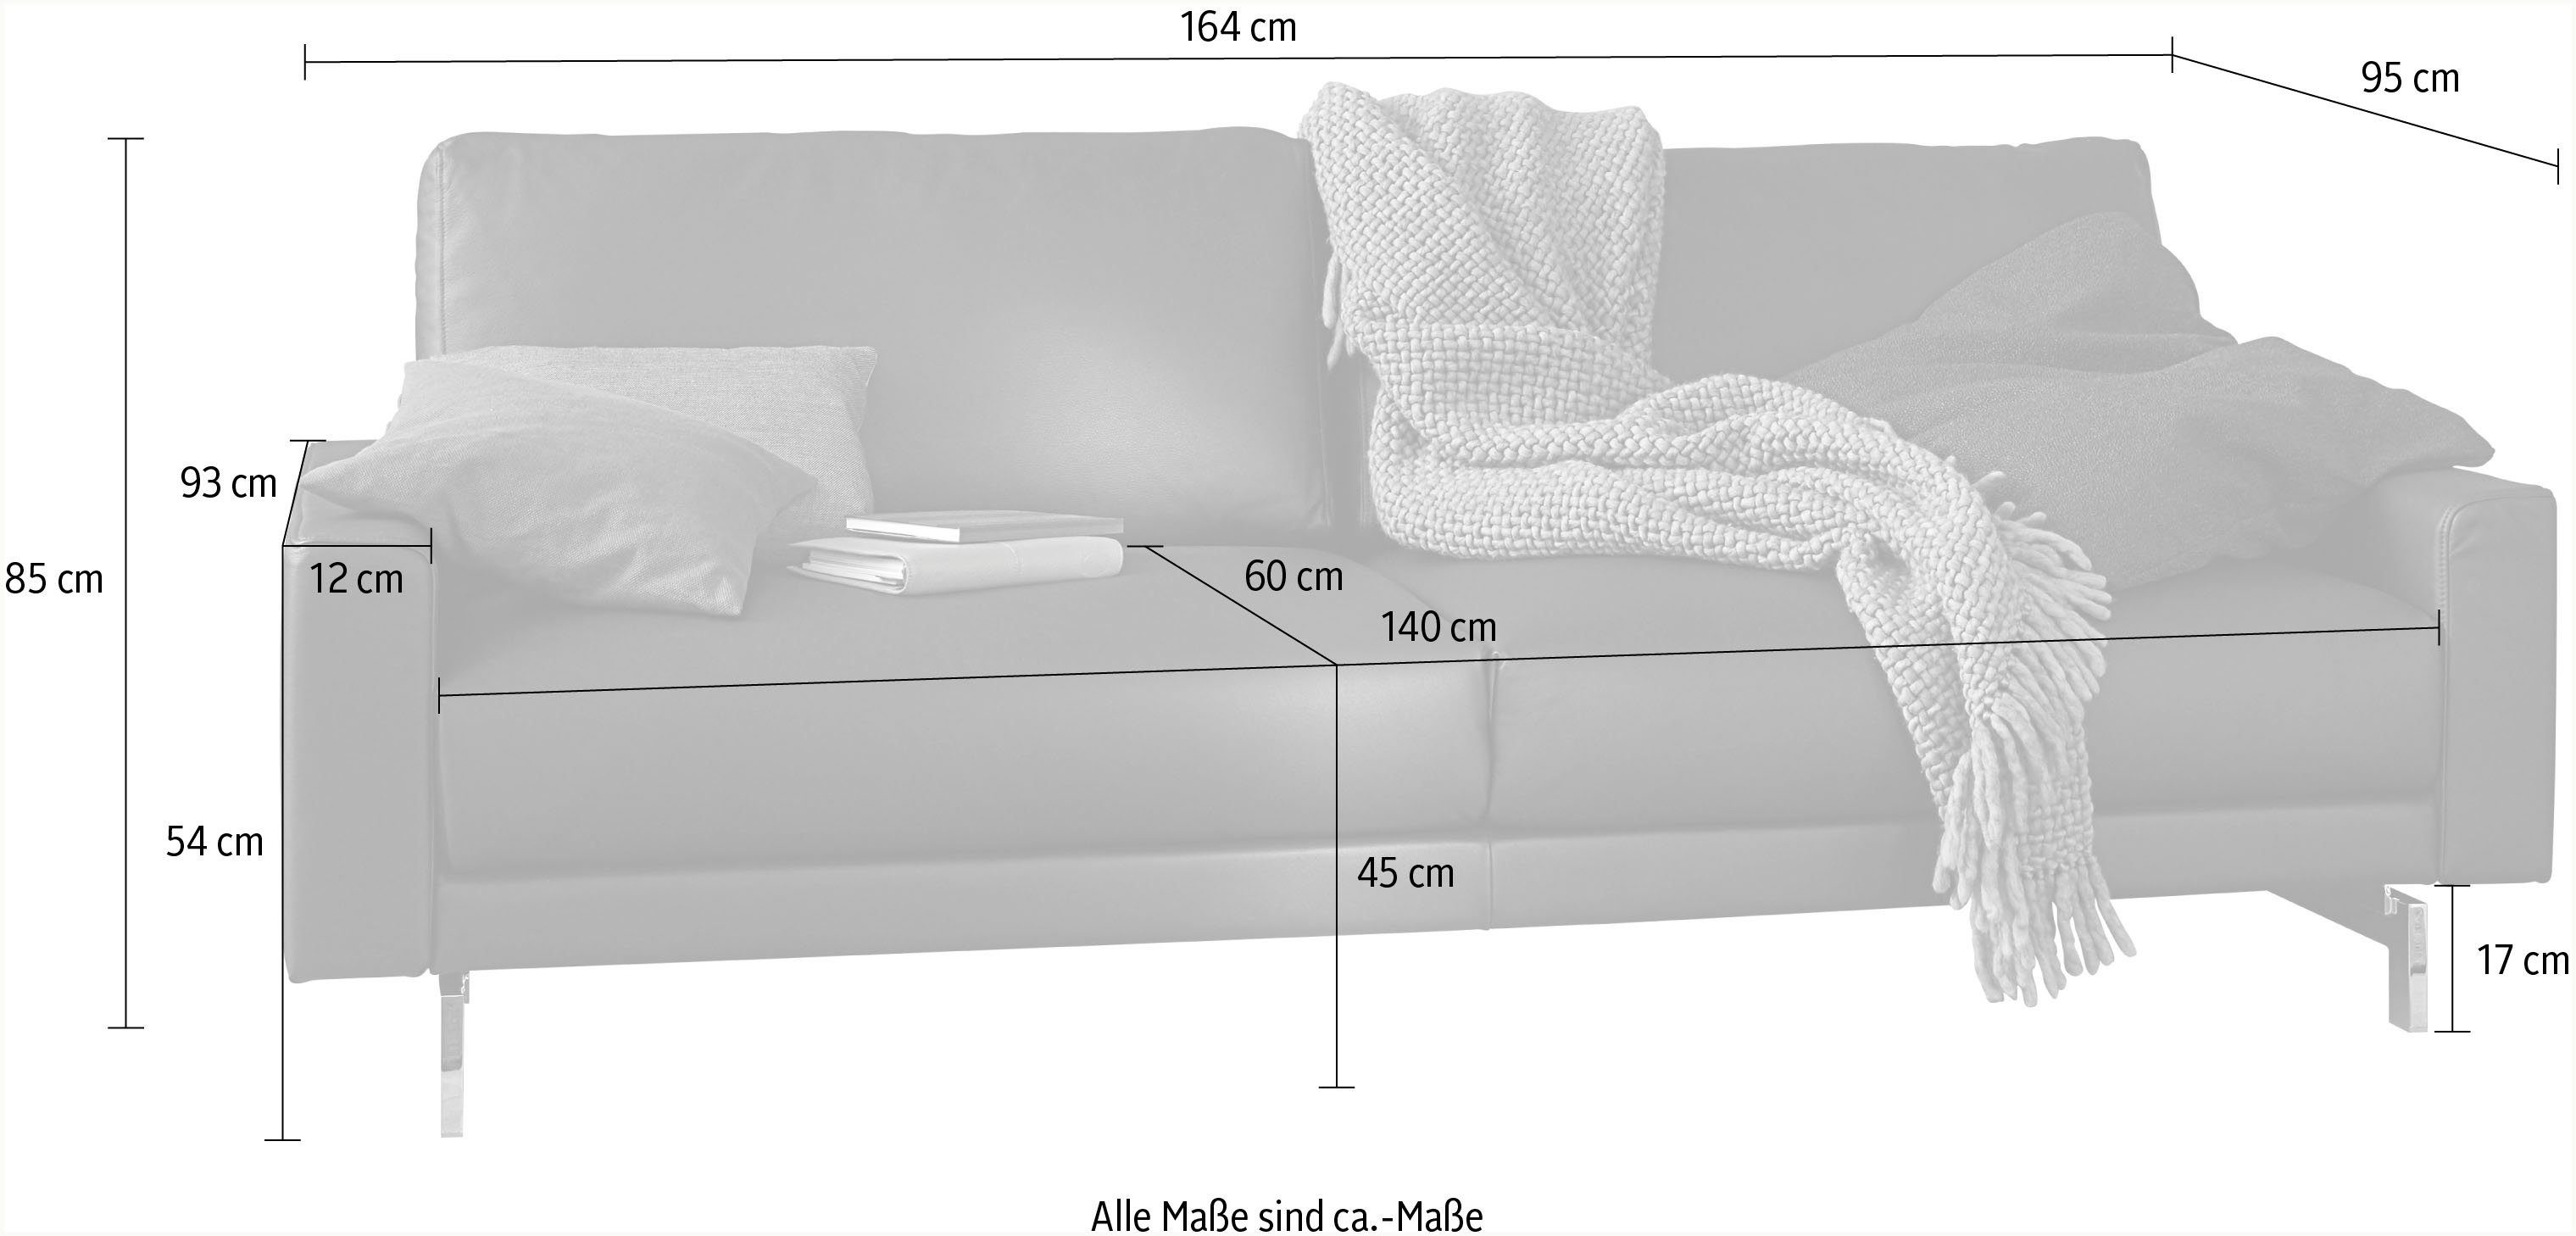 chromfarben sofa glänzend, Armlehne hülsta Fuß niedrig, hs.450, cm 164 2-Sitzer Breite